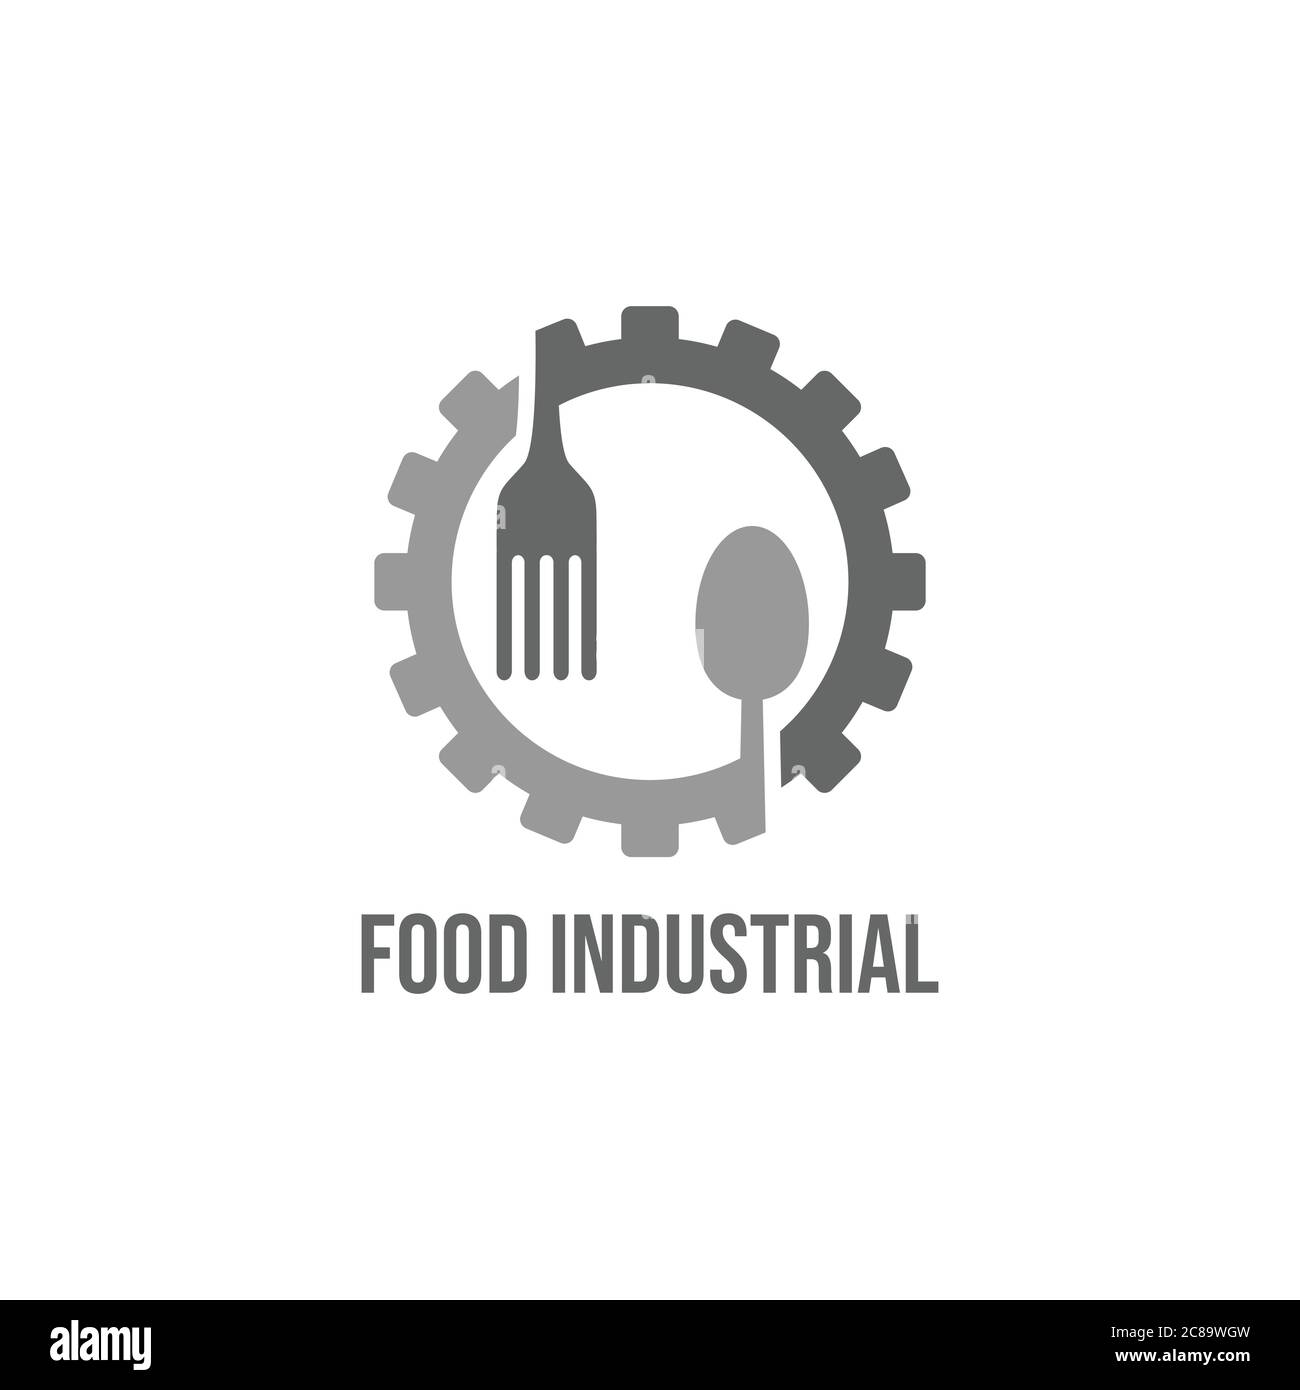 Food industrial logo design concept food and drink industrial logo vector illustration Stock Vector